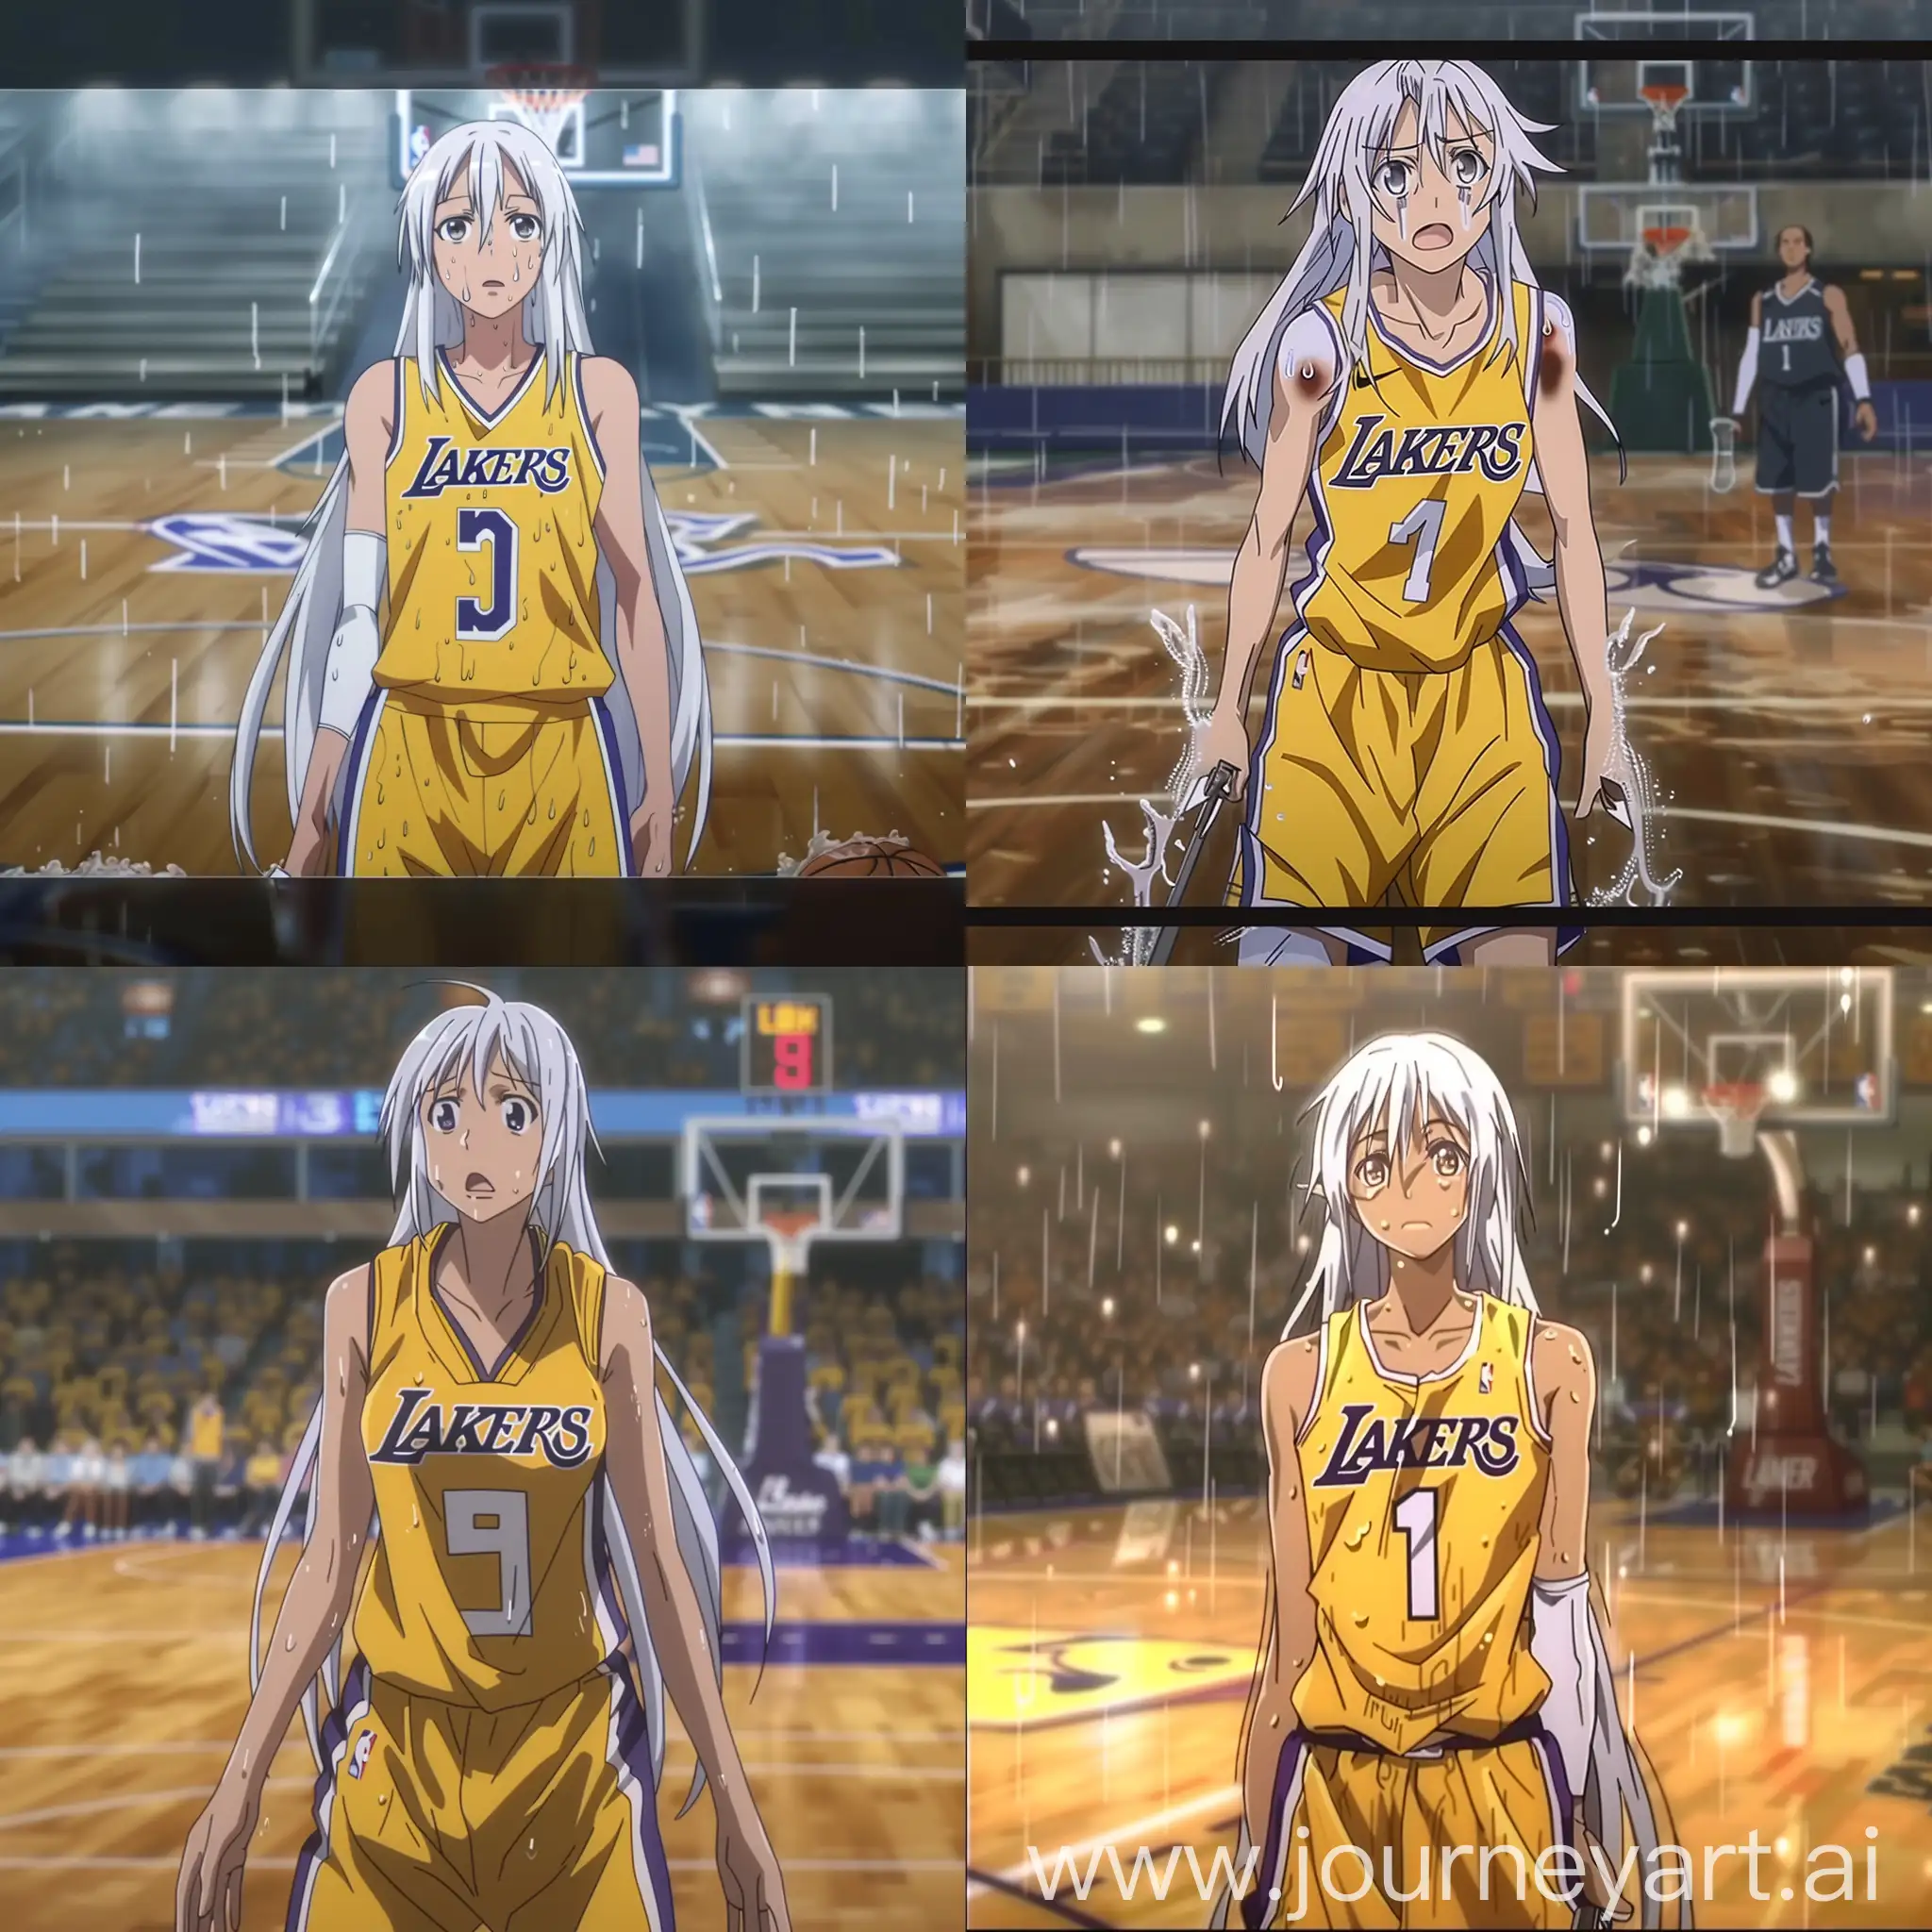 photo screenshot from anime, Asuna yuuki from Sword Art Online, White Hair, yellow basketball uniform "LAKERS", sweat, basketball court 